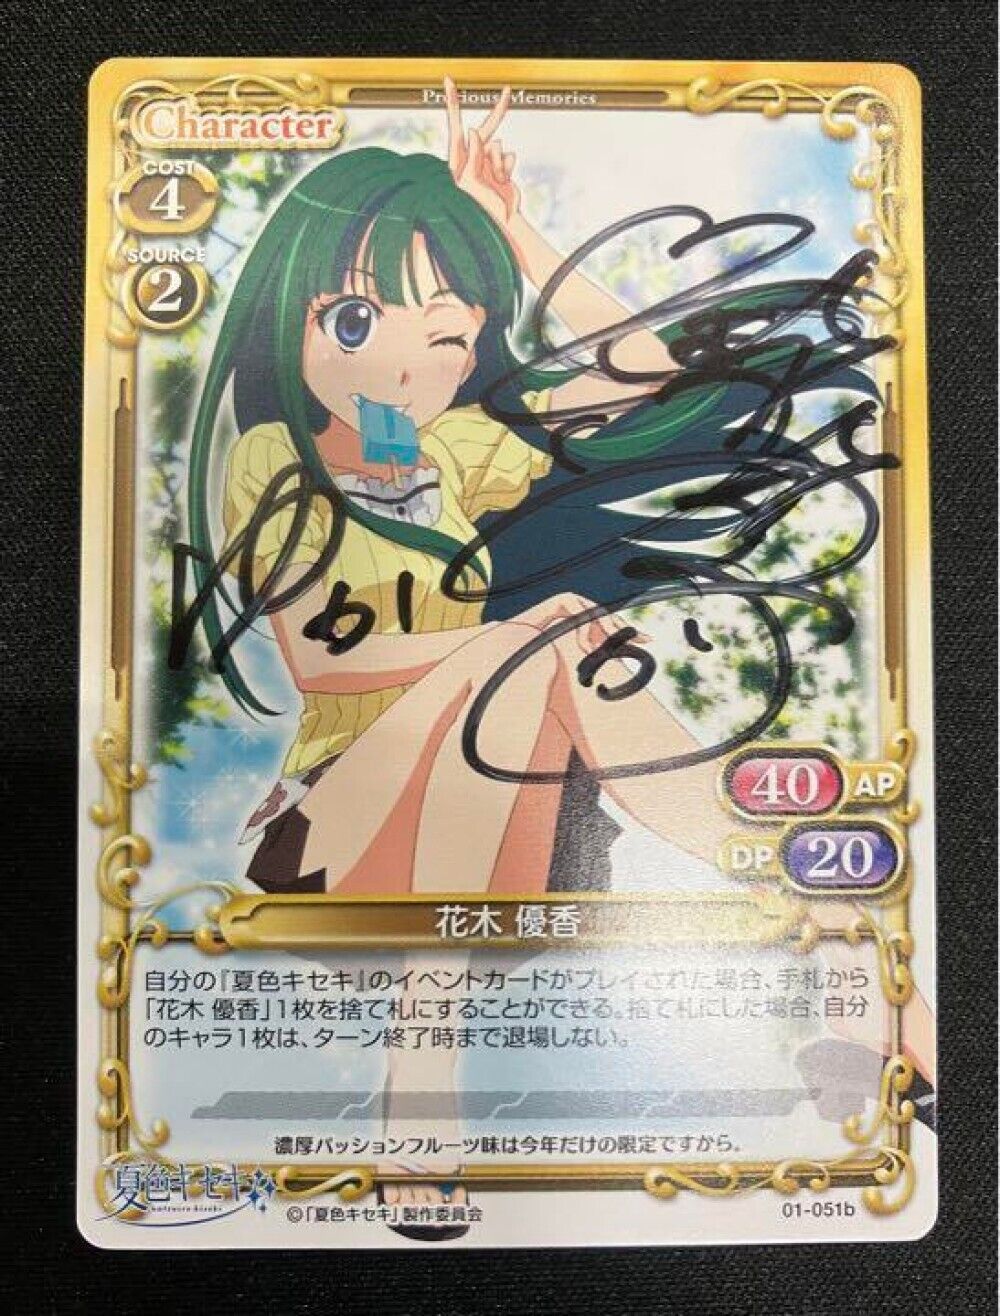 Final price reduction】Precious Memories autograph by Yuka Hanaki